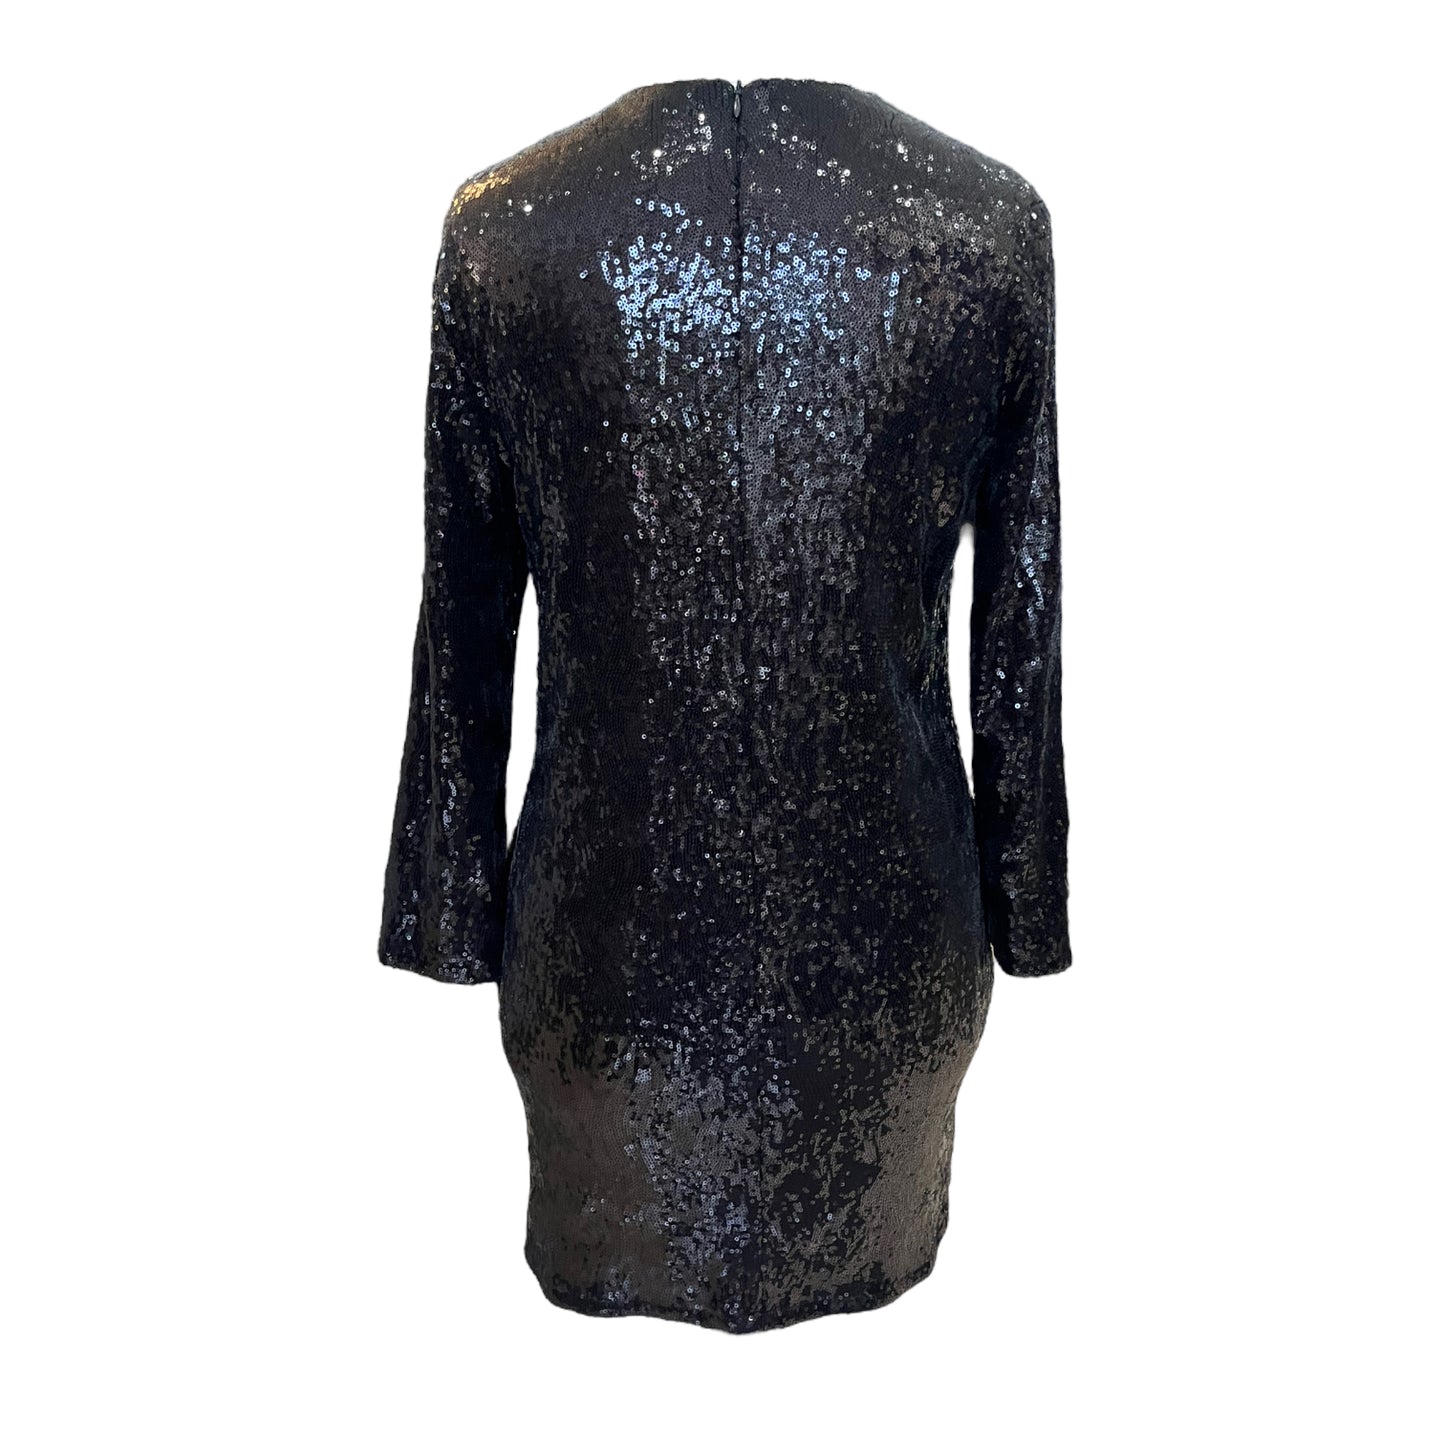 Balmain Black Sparkly Dress